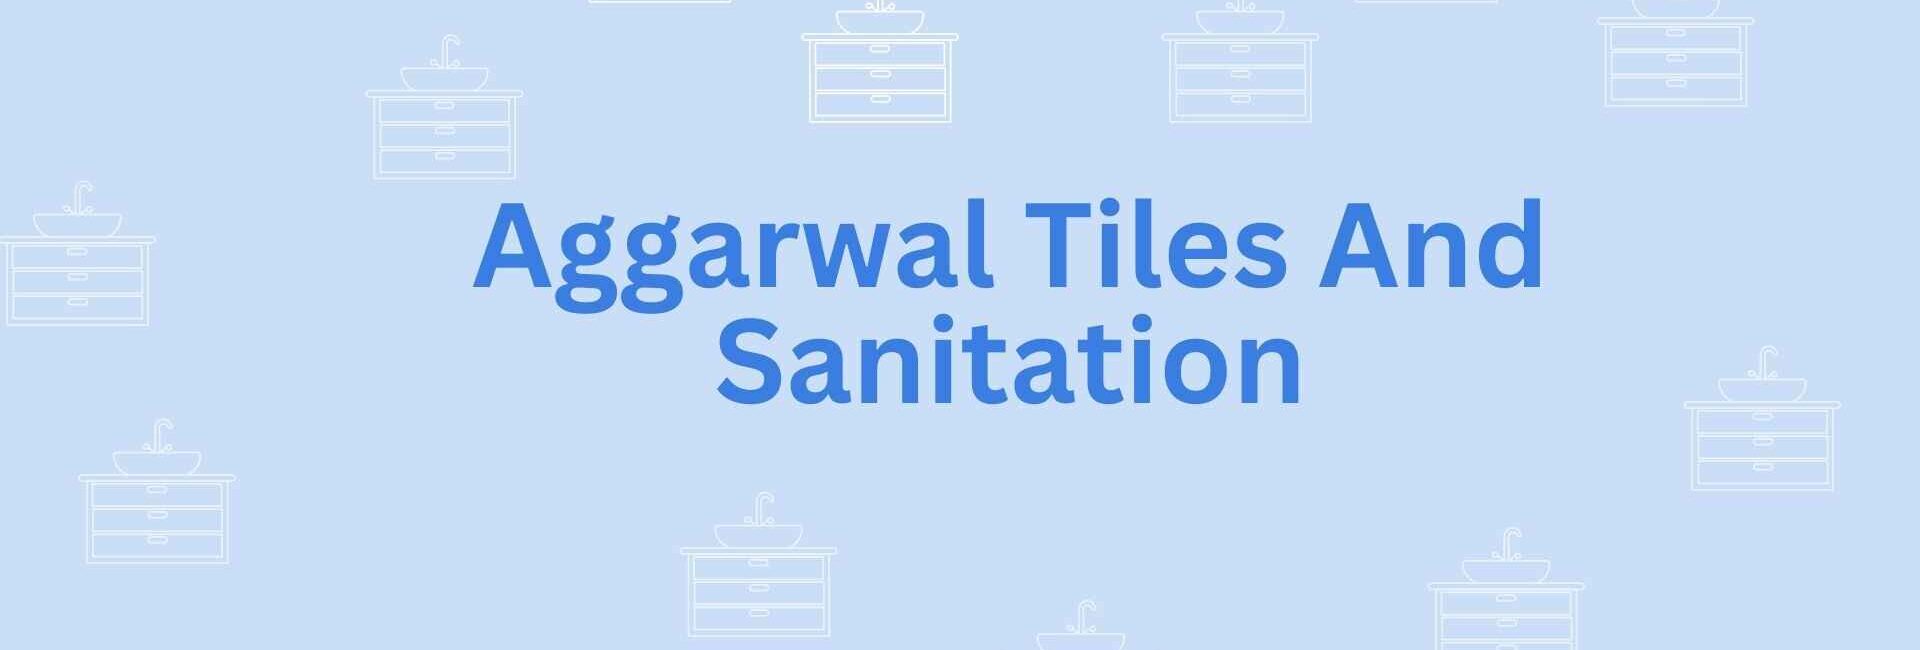 Aggarwal Tiles And Sanitation- Sanitary bin Dealer in Noida